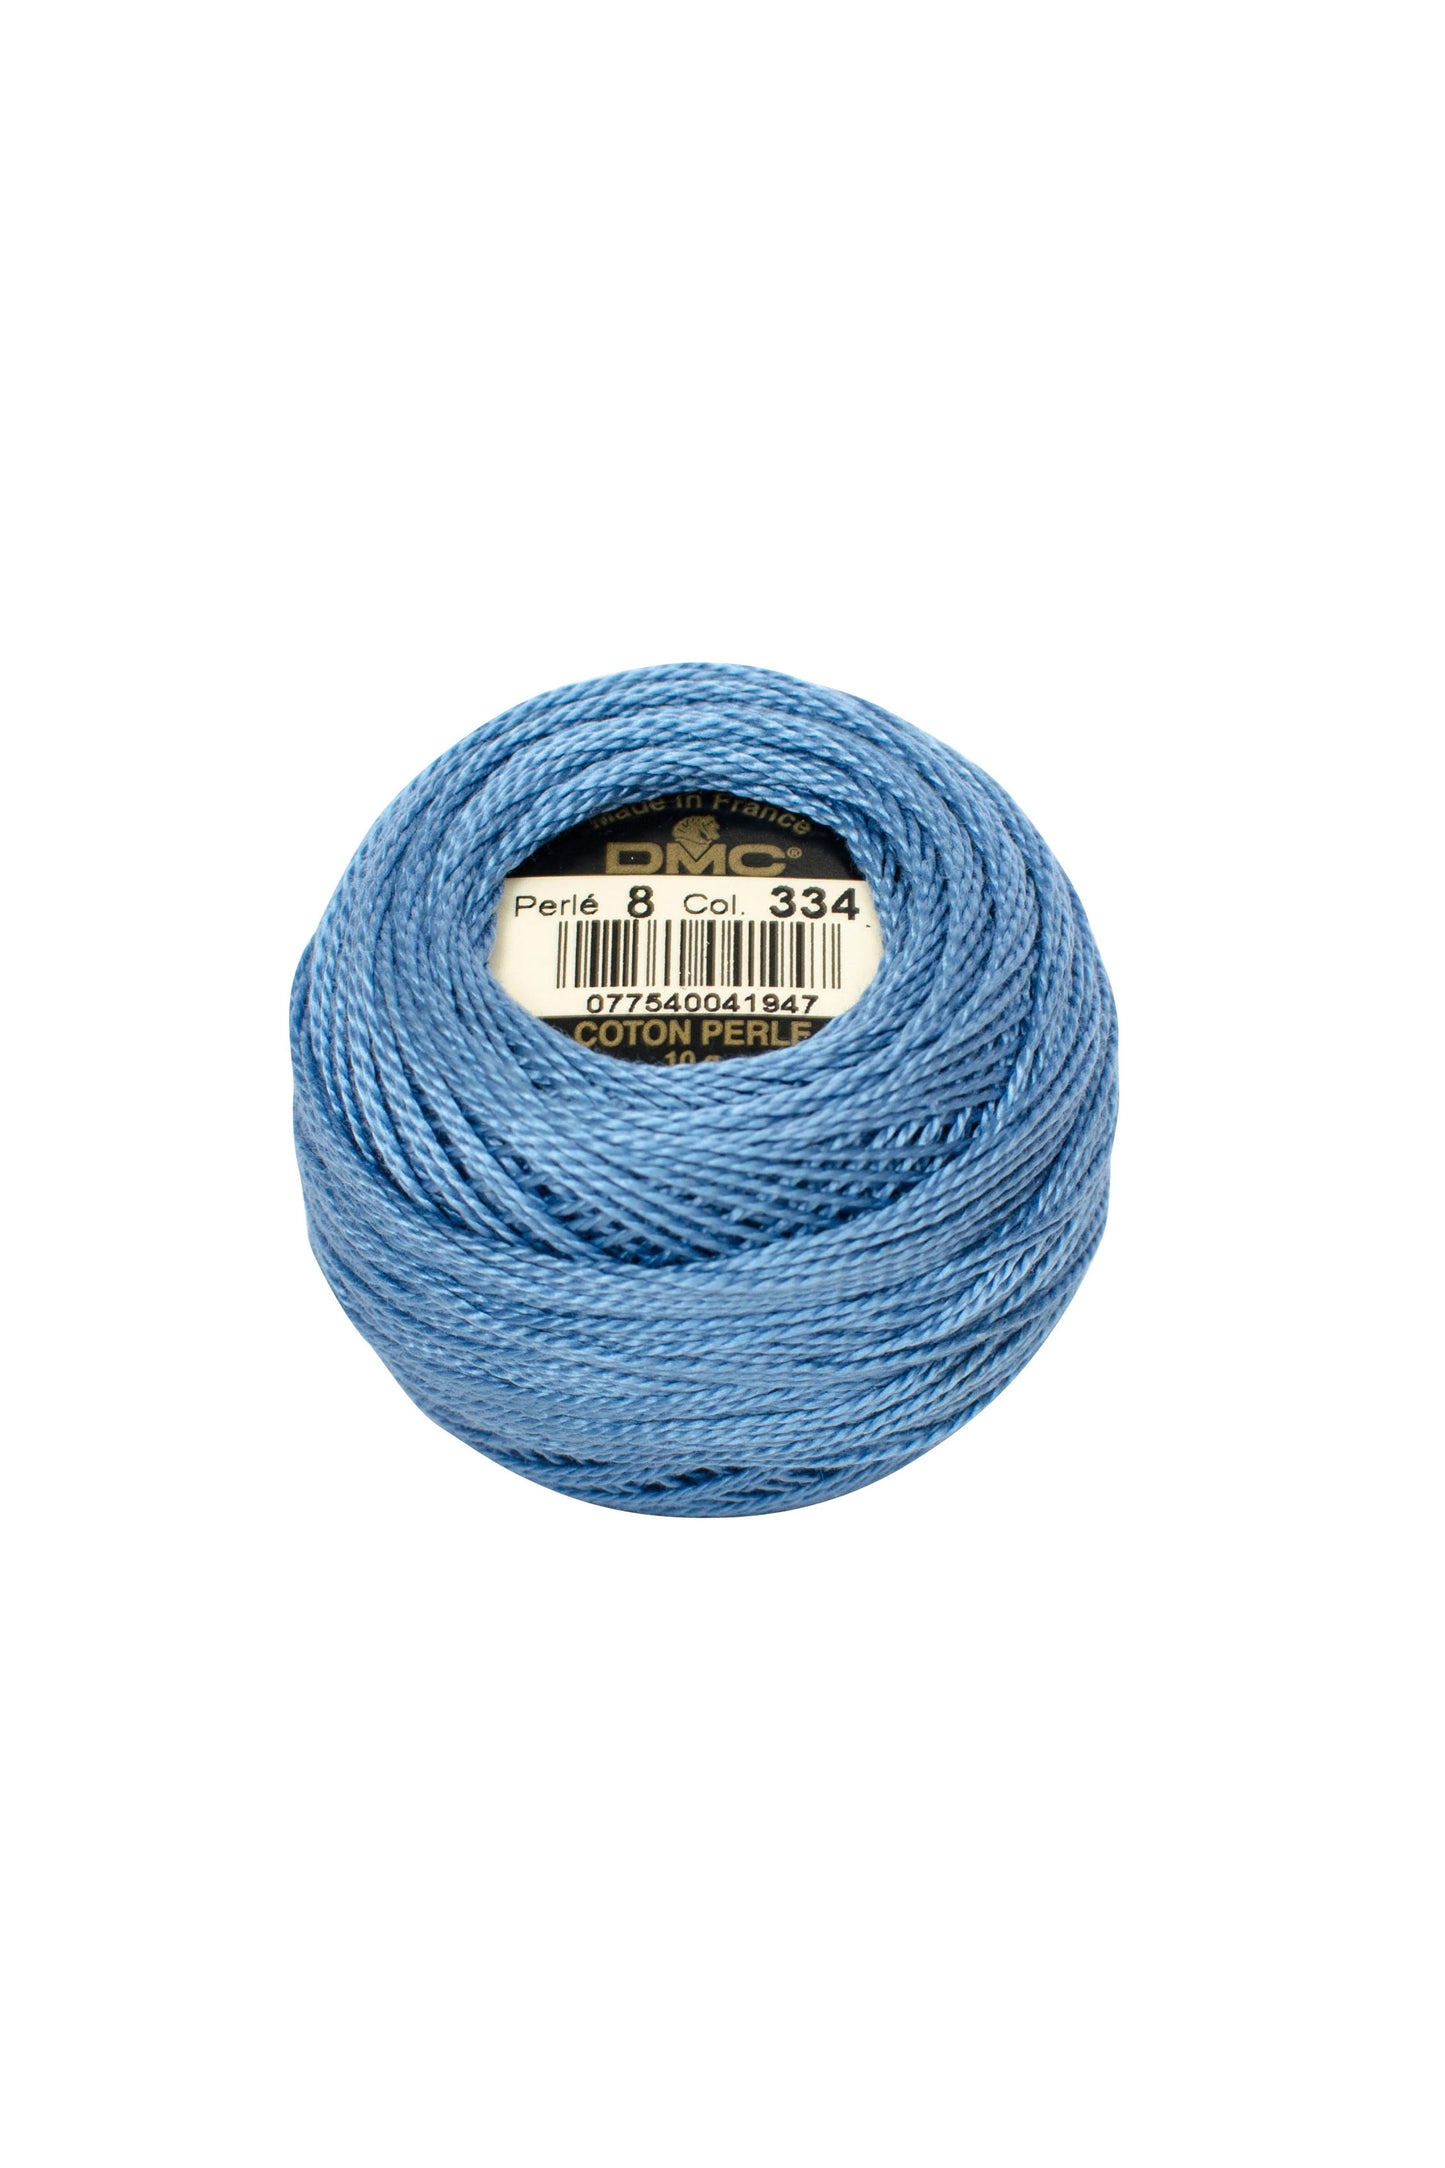 334 Medium Baby Blue - DMC #5 Perle Cotton Ball